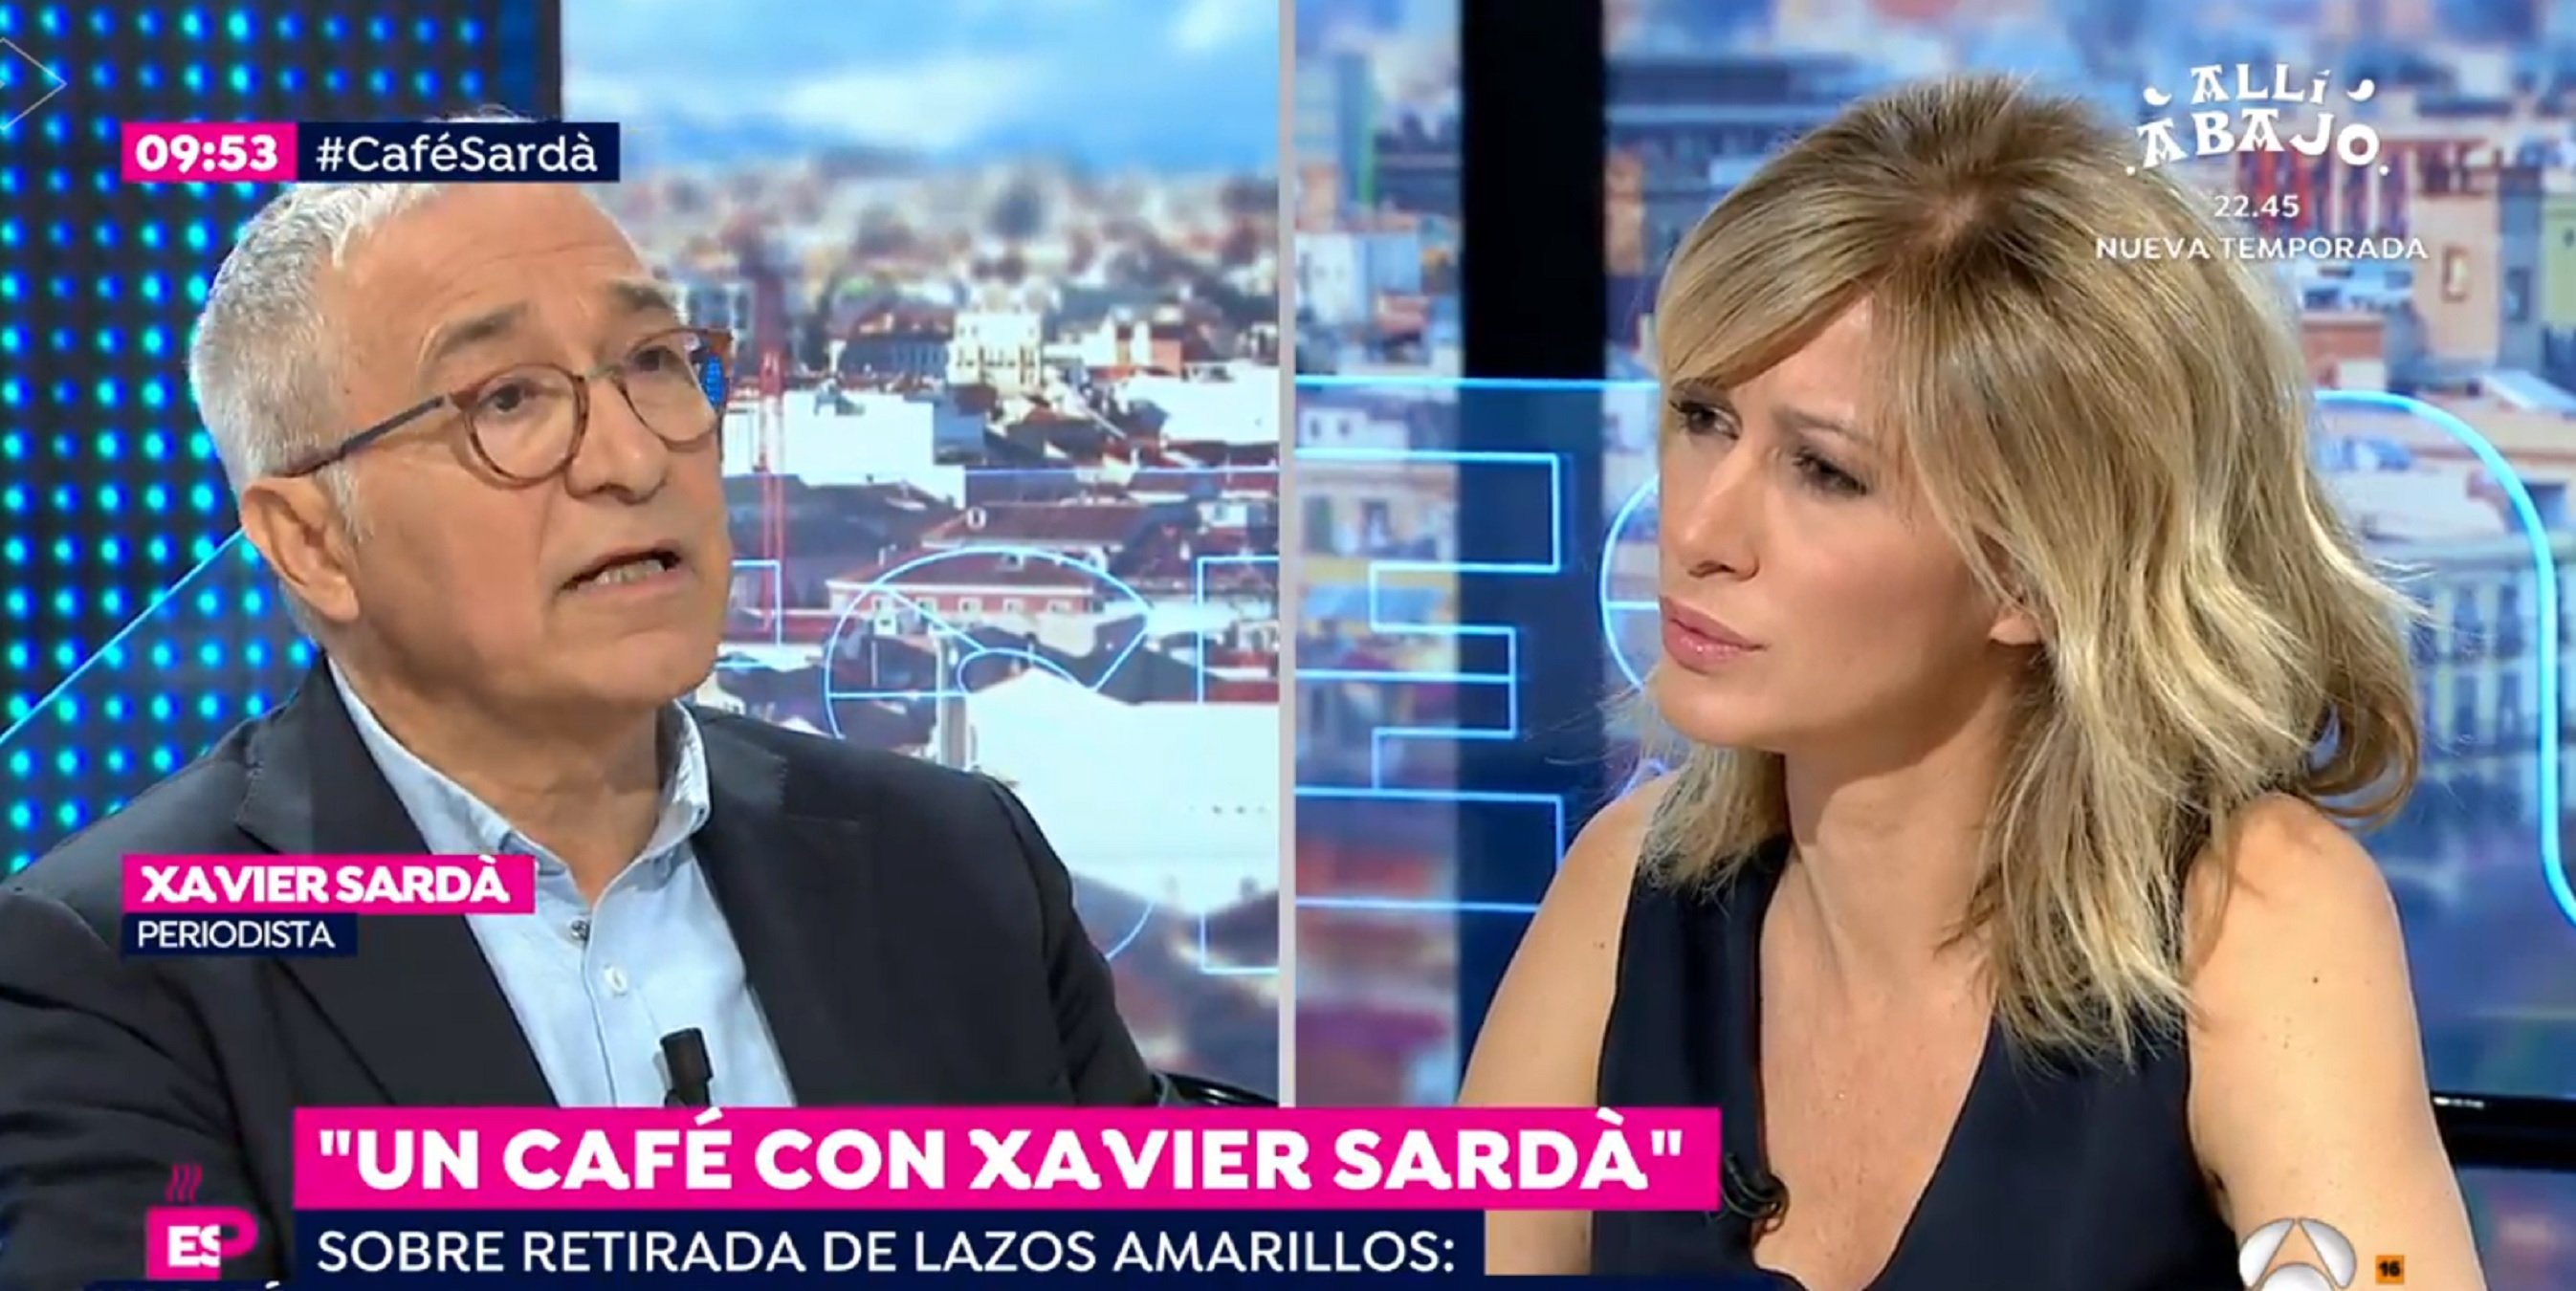 Insultan a Sardà: "mentecato, decadente, jeta" por pedir una sentencia leve